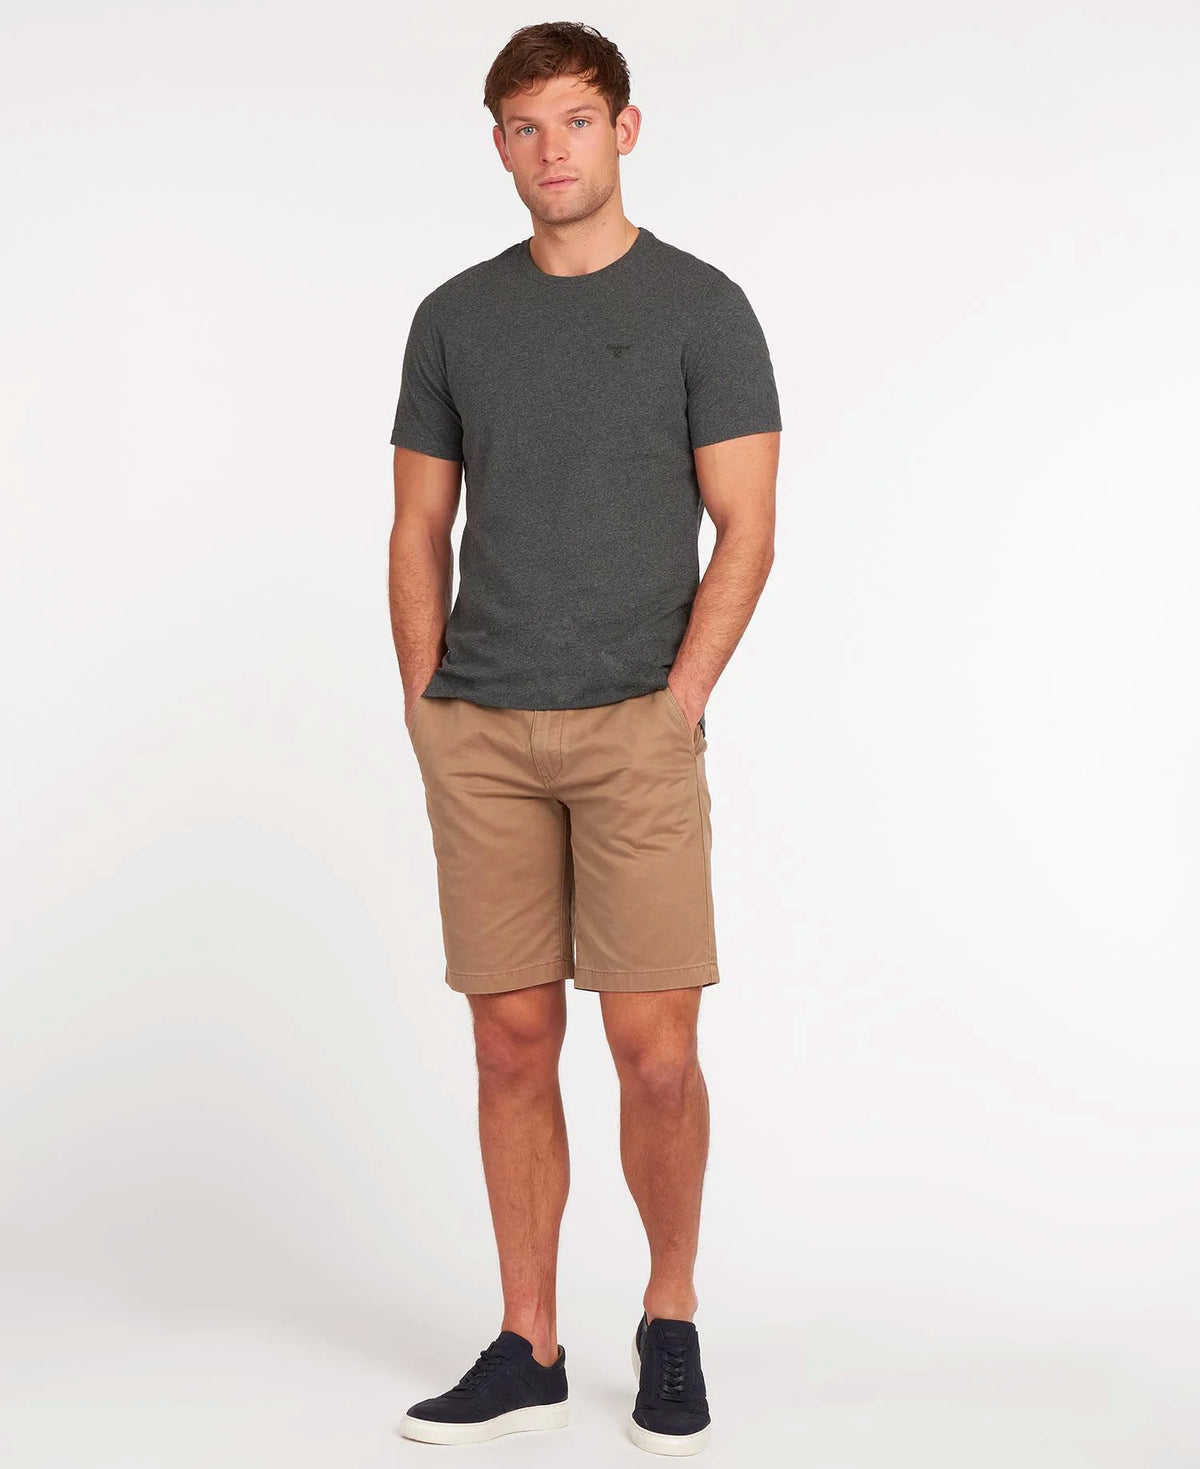 Barbour Men's Sports T-Shirt - Short Sleeved, 02, Mts0331, Slate Marl